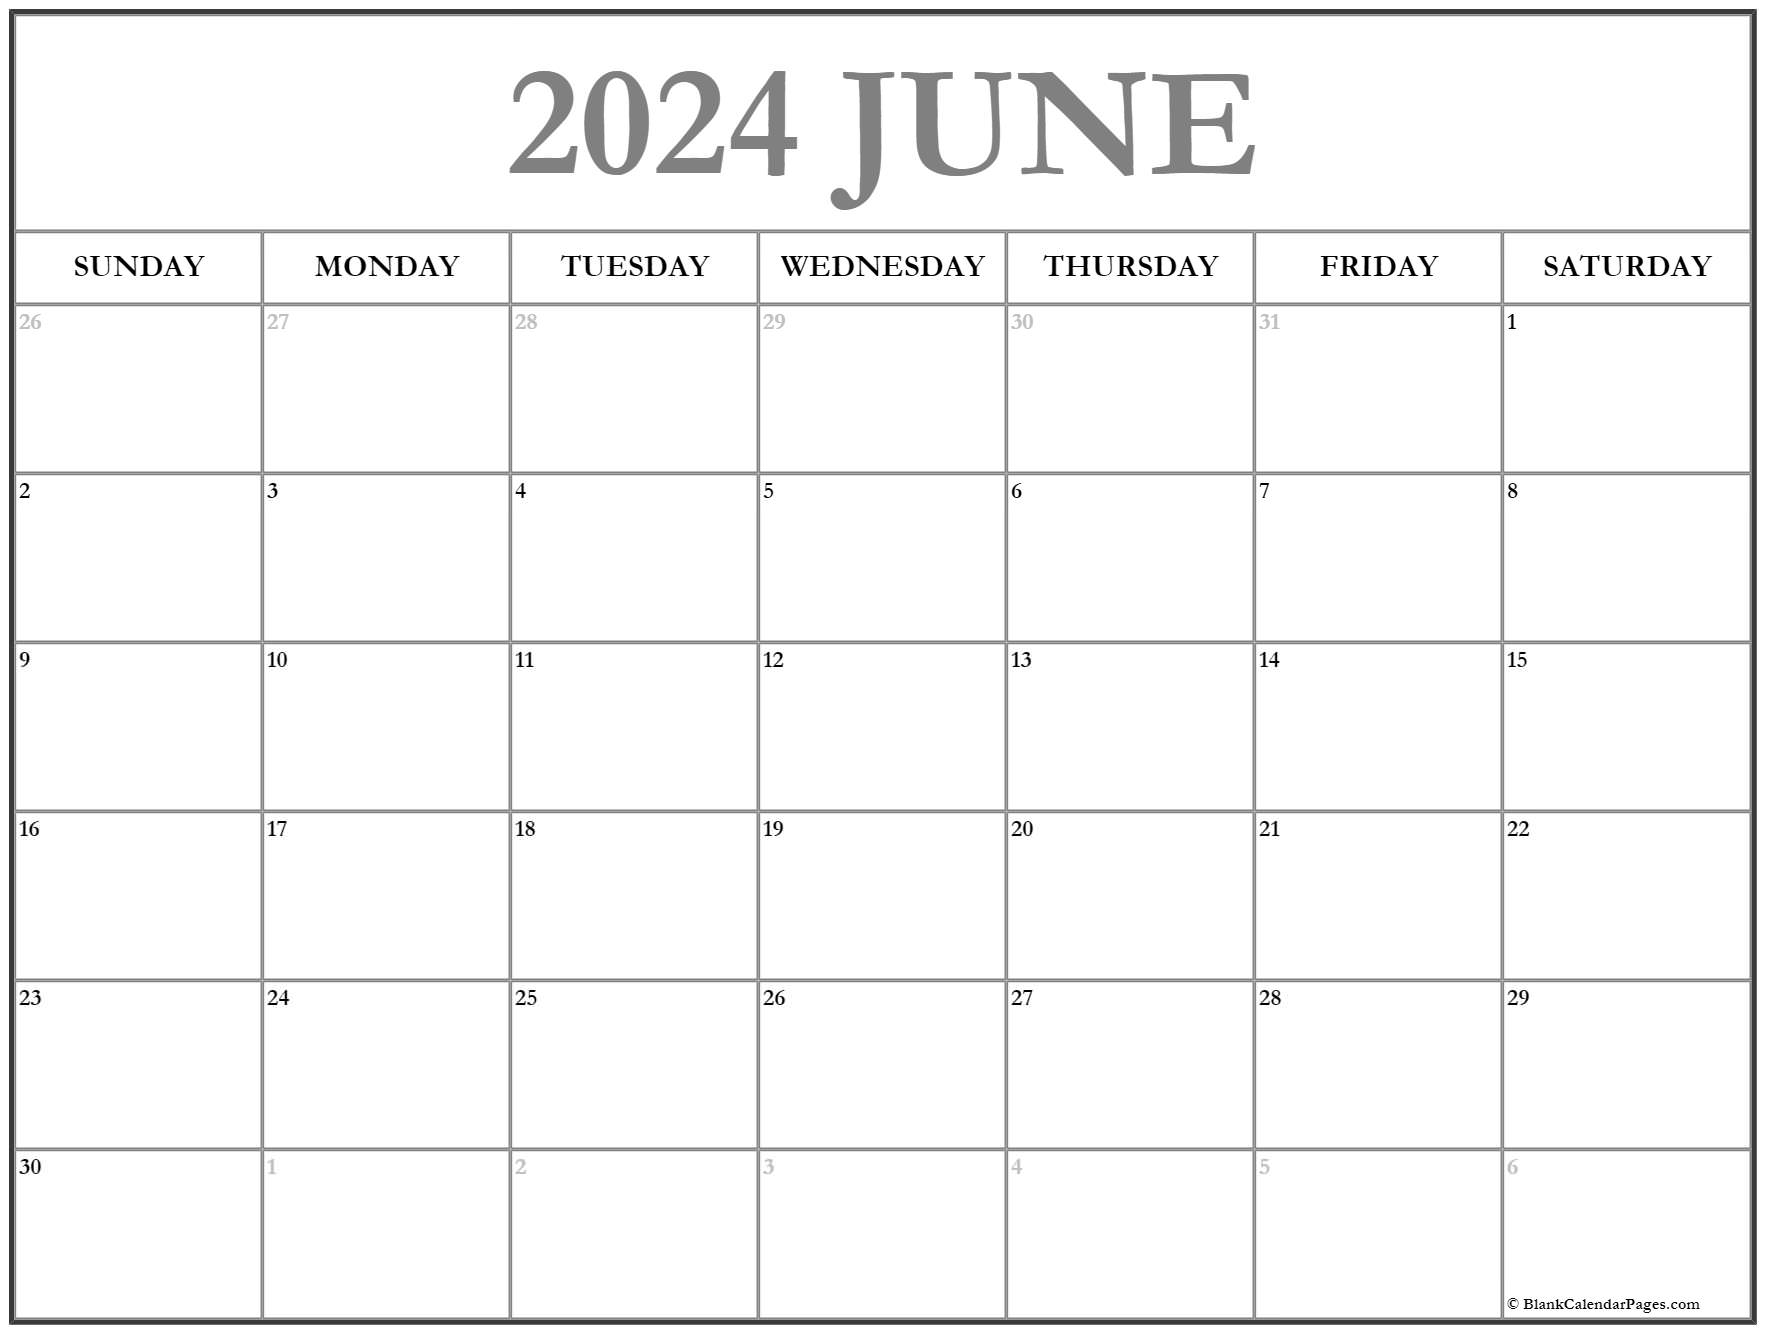 june-2023-calendar-free-printable-calendar